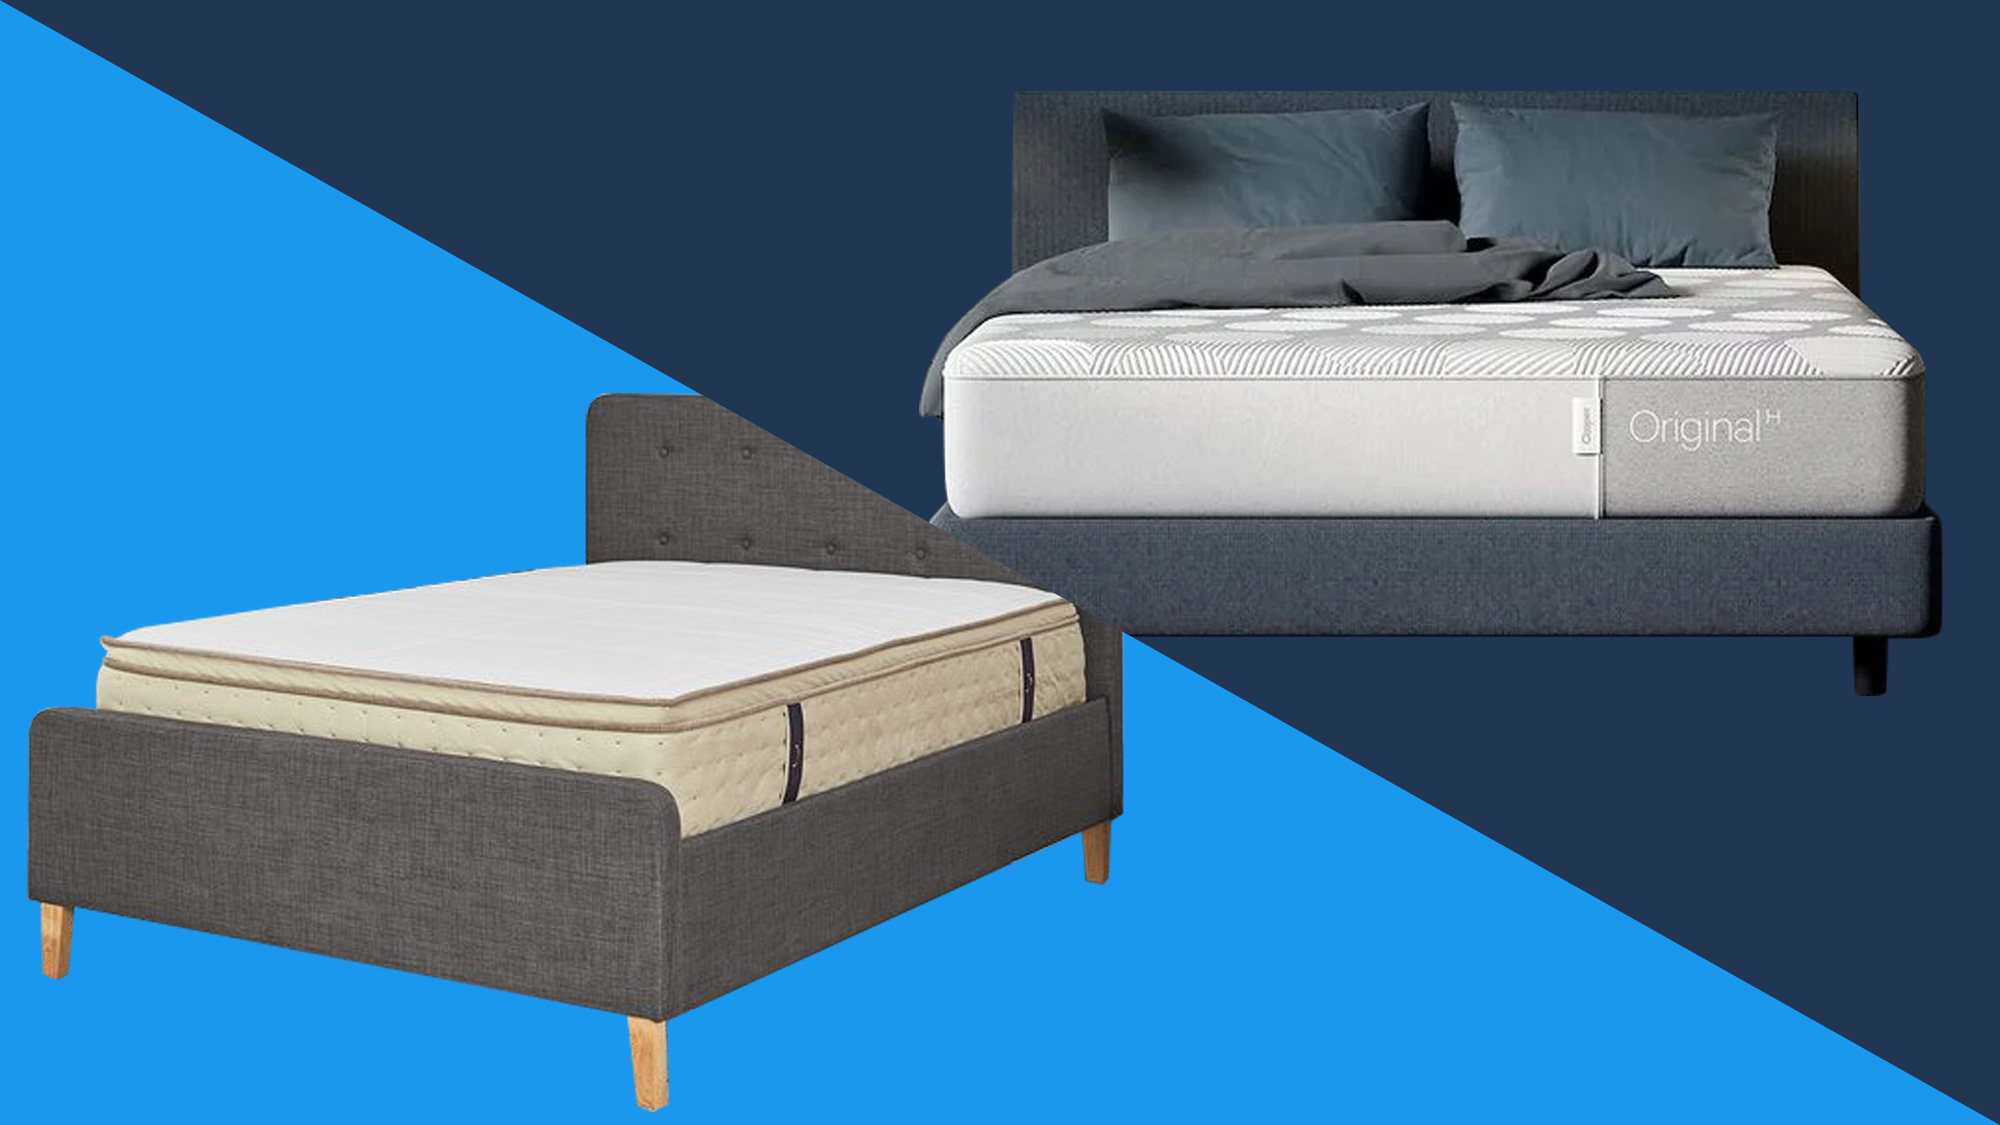 casper hybrid vs dreamcloud mattress